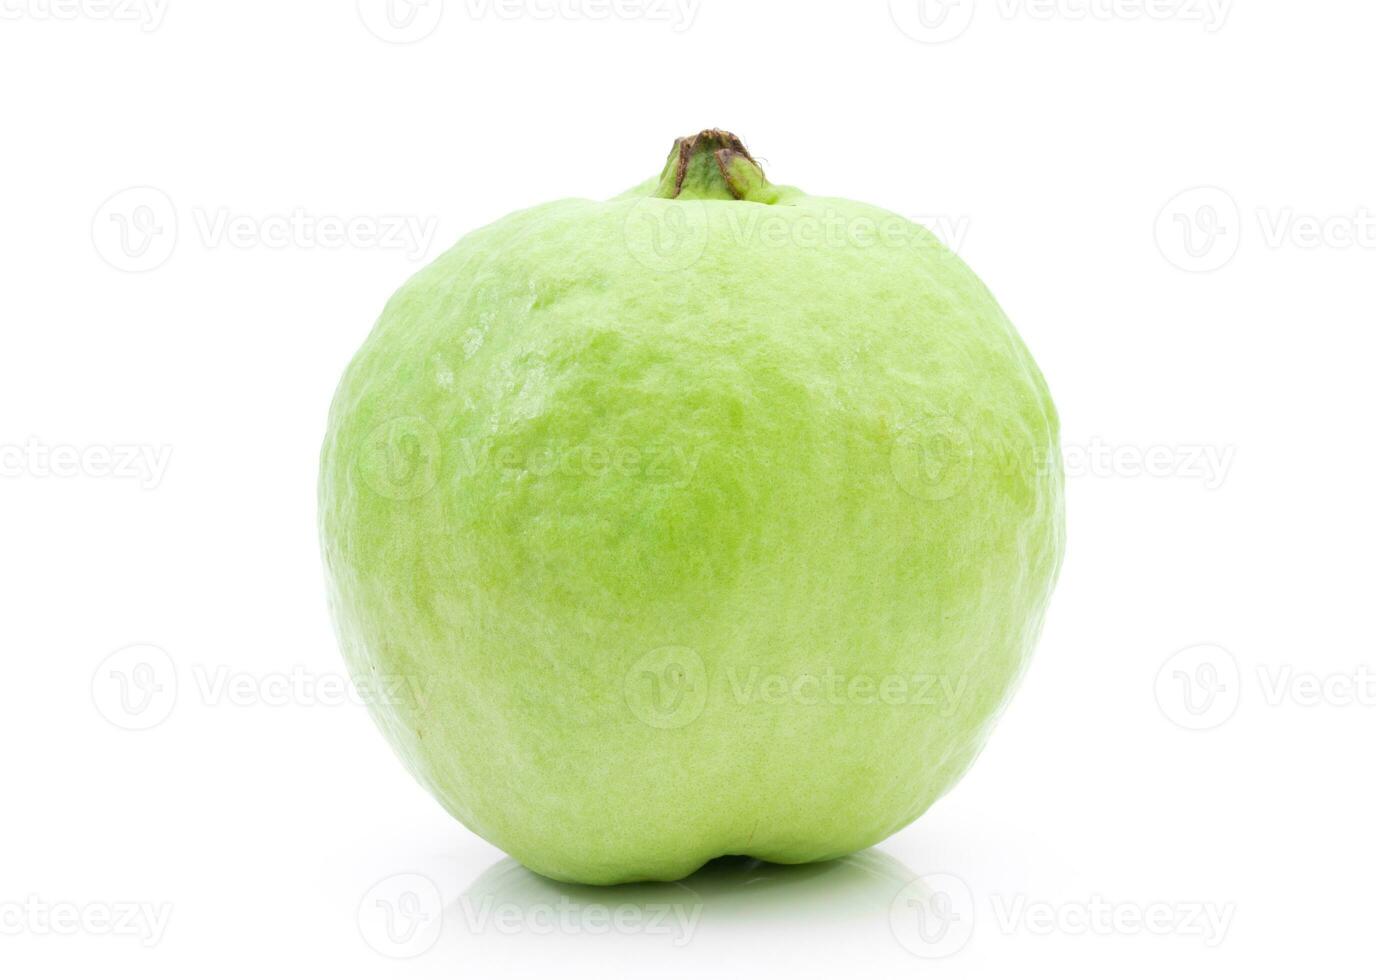 guava frukt på en vit bakgrund foto